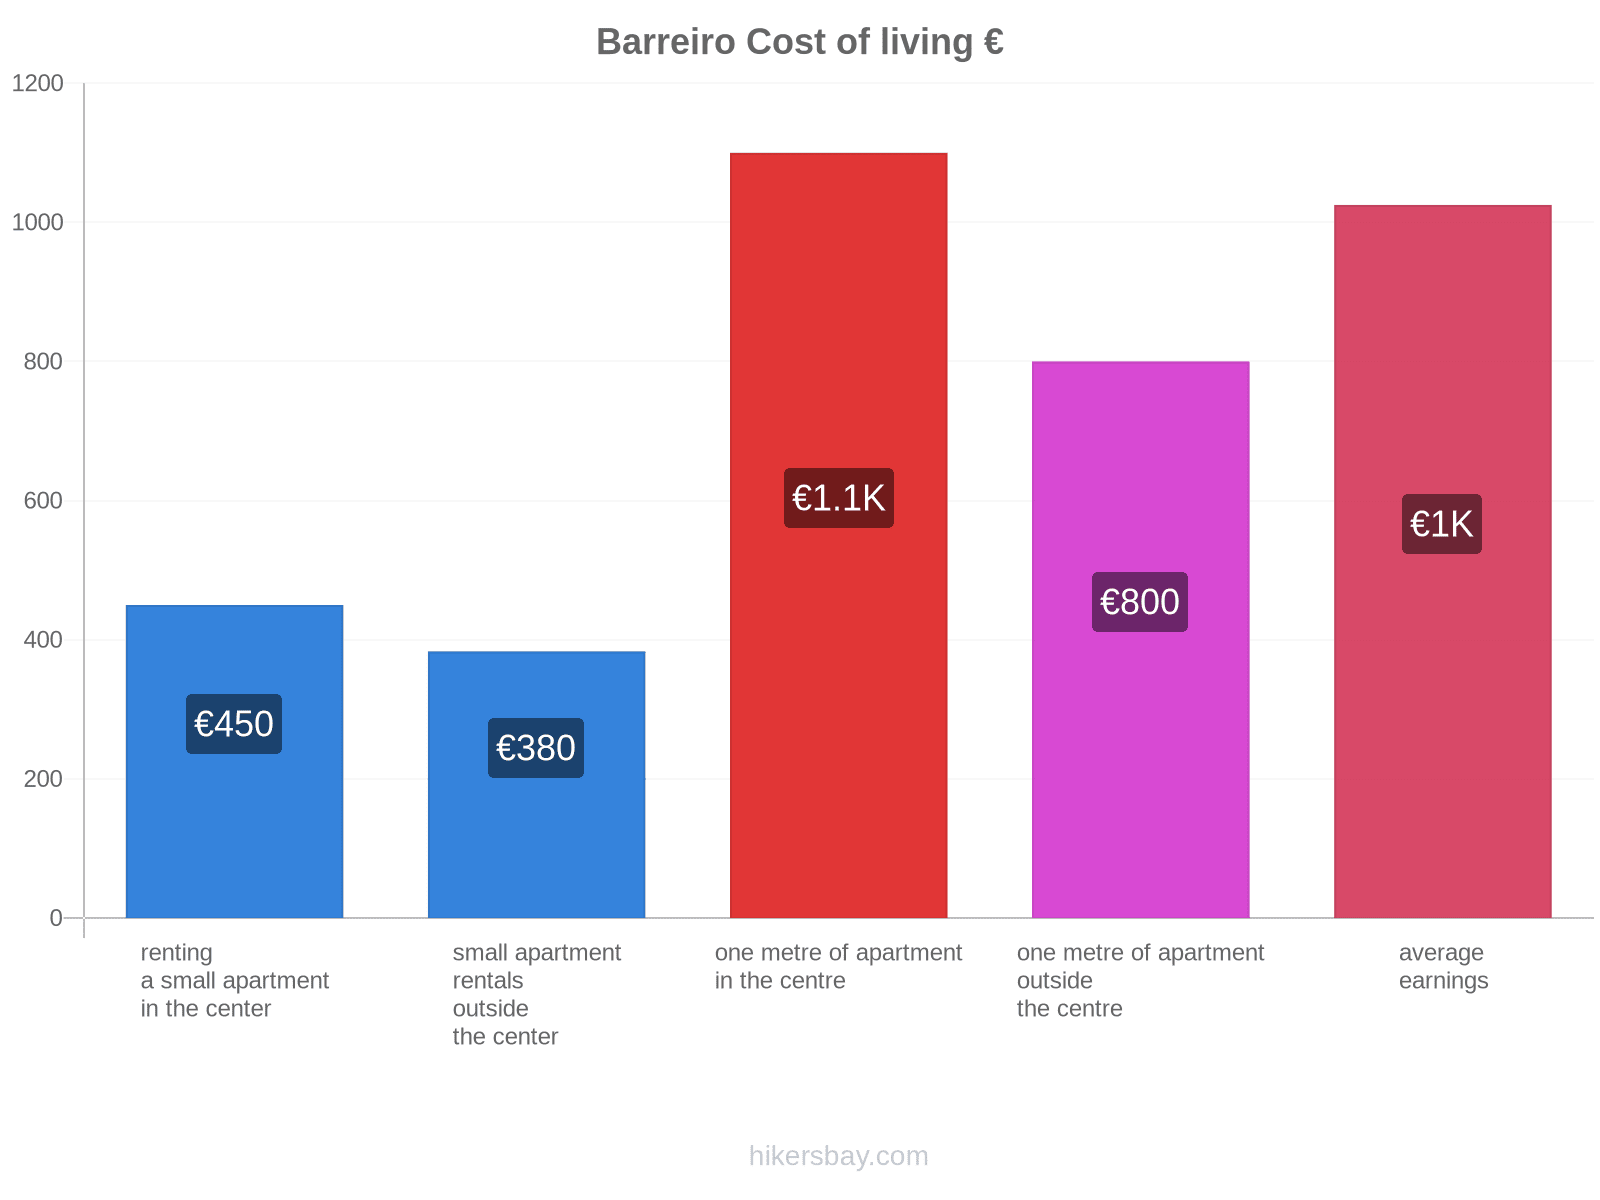 Barreiro cost of living hikersbay.com